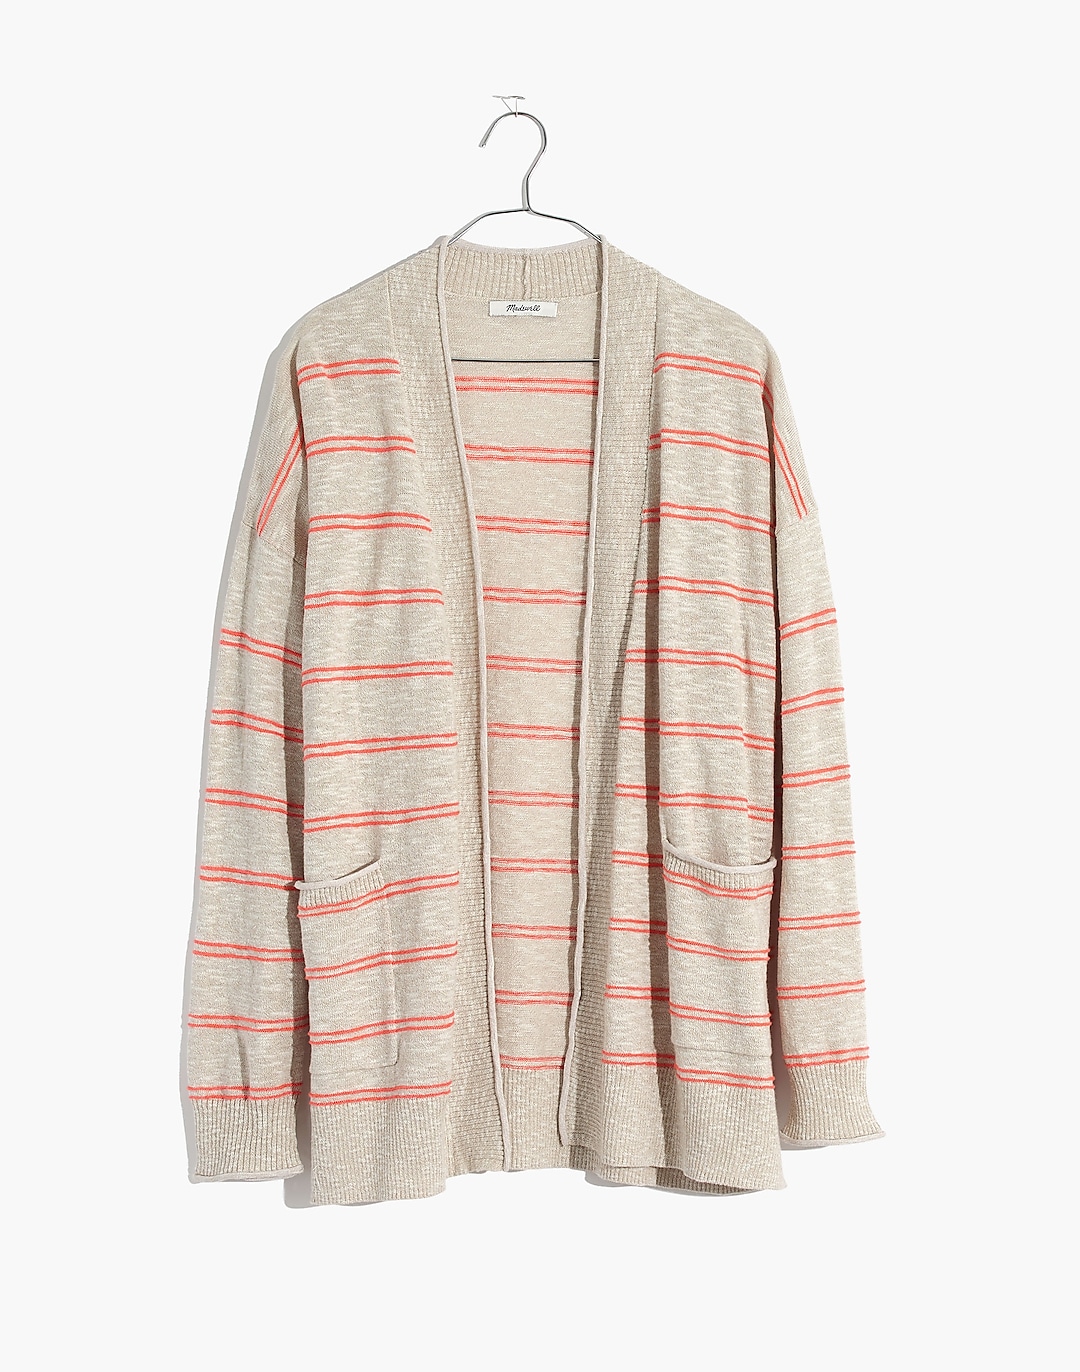 Bradley Cardigan Sweater in Textured Stripe